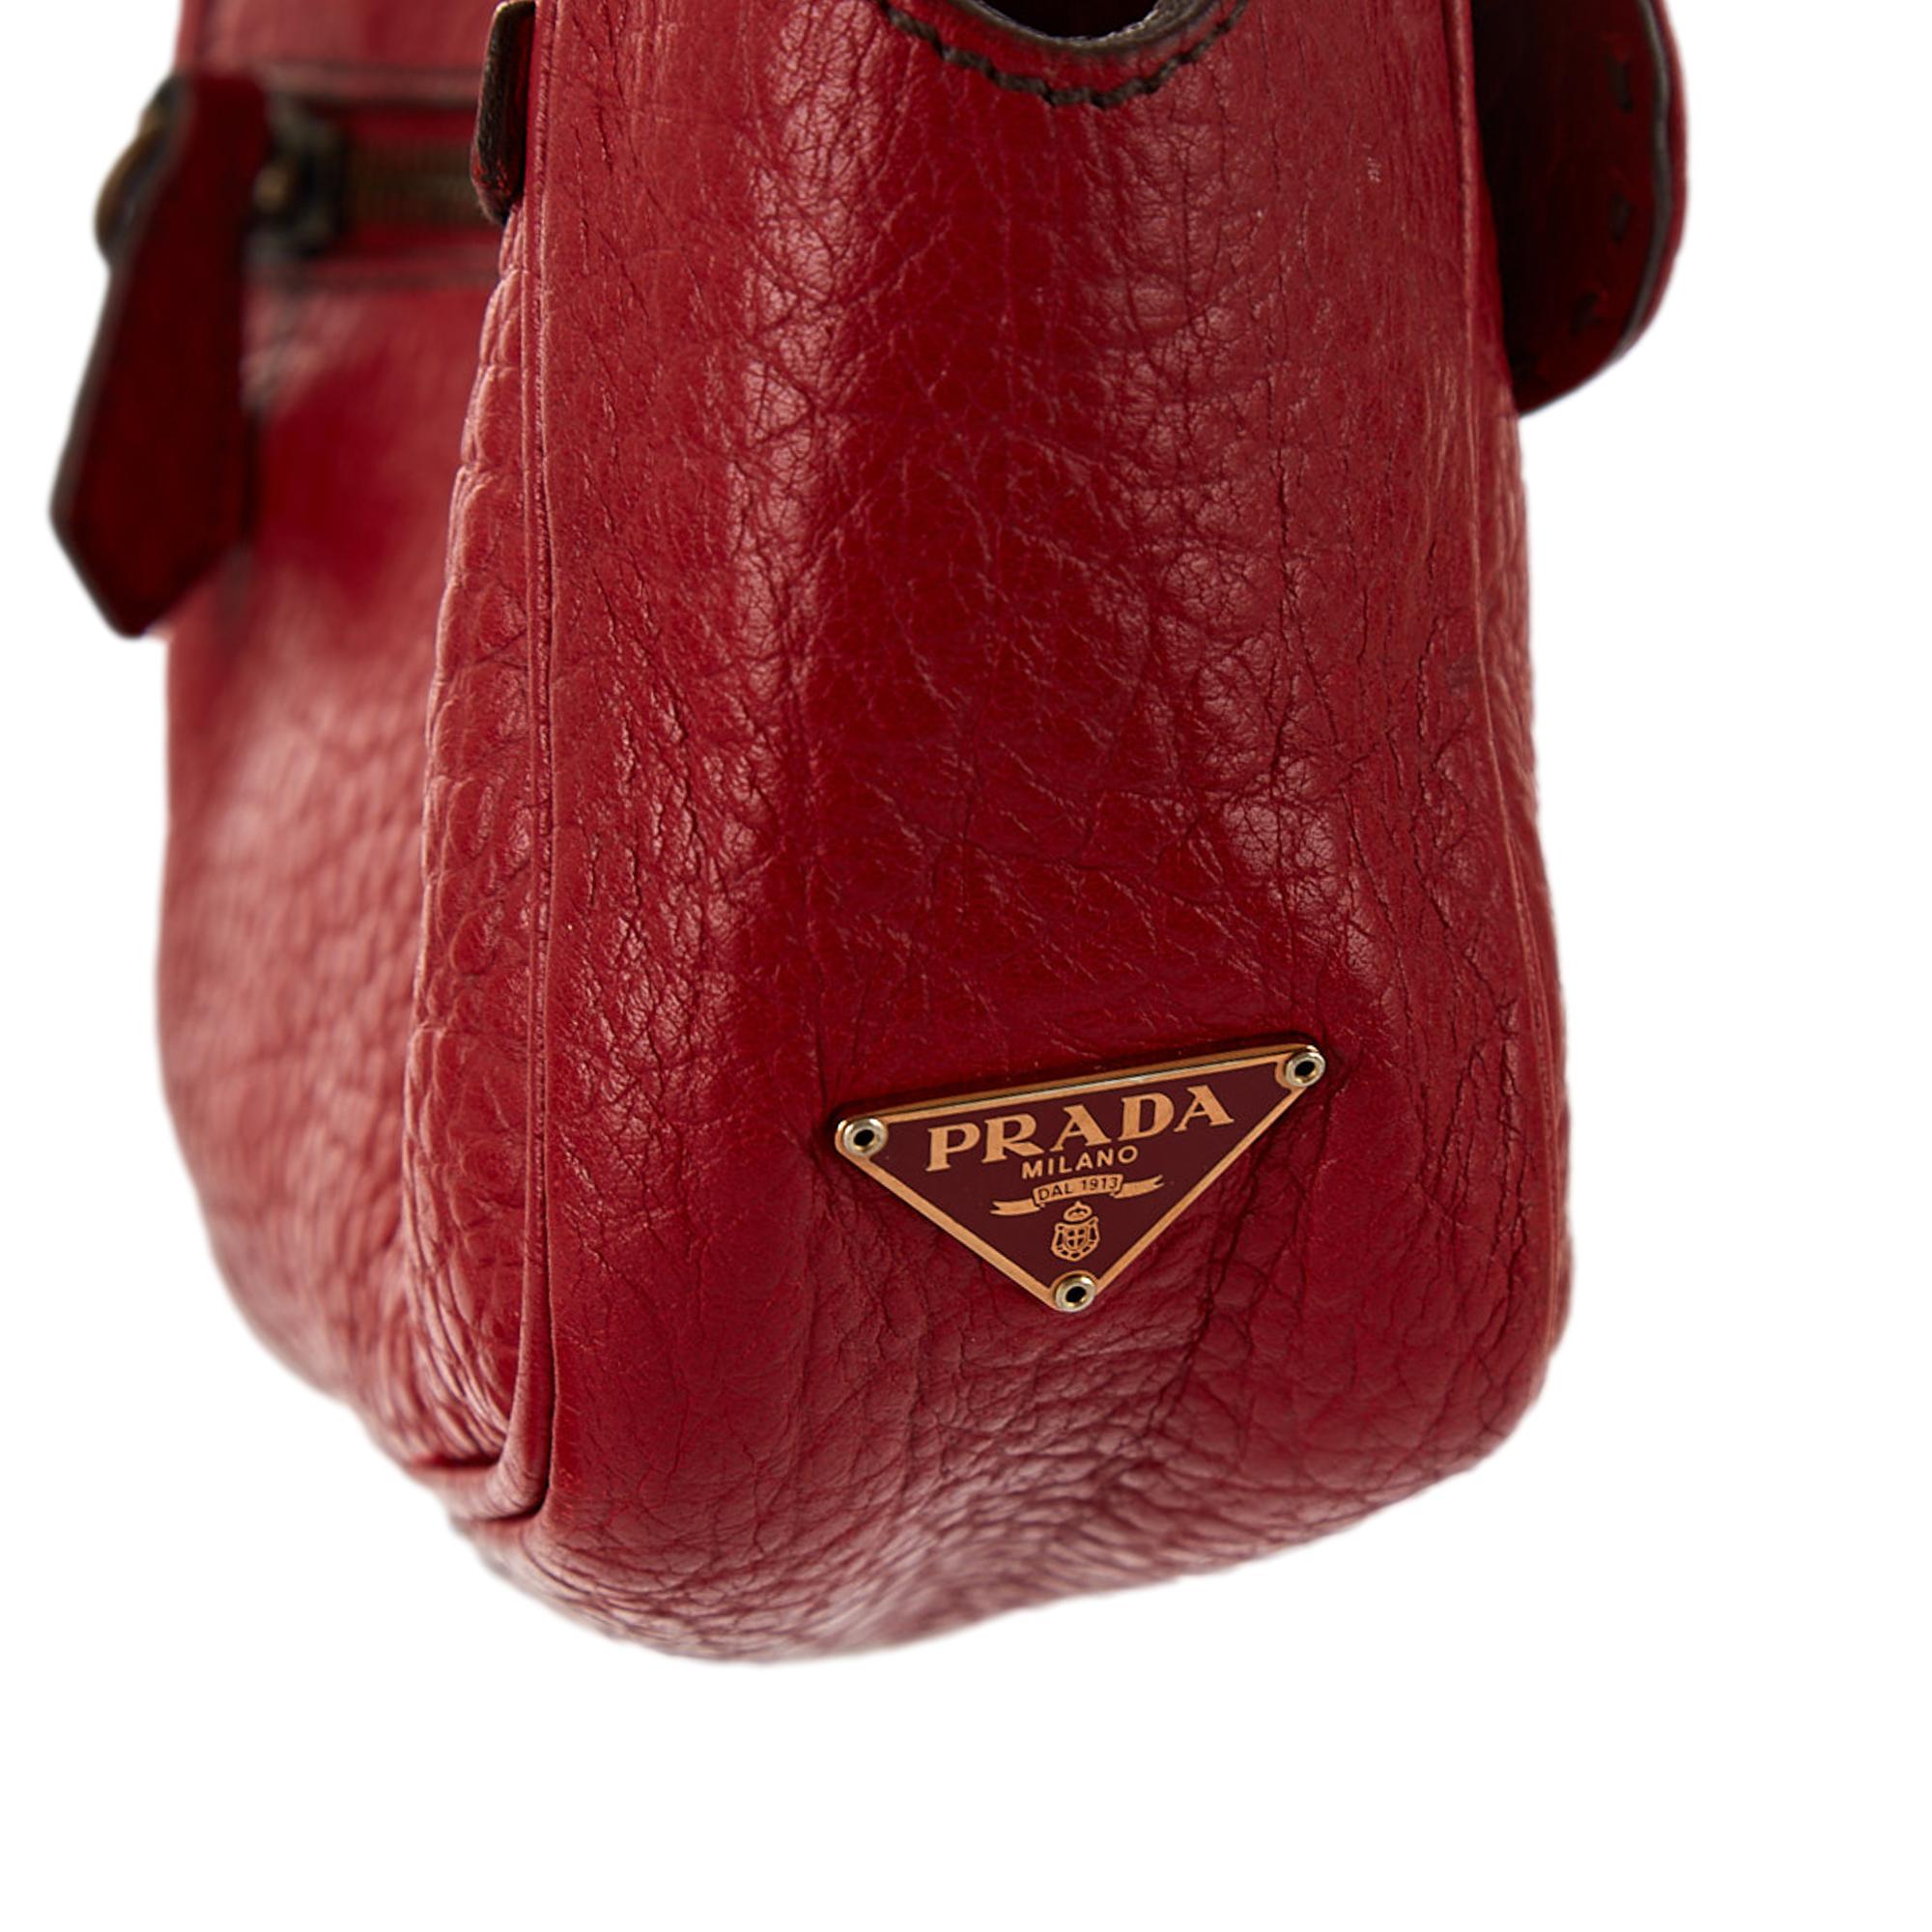 Prada Red Leather Mini Bag